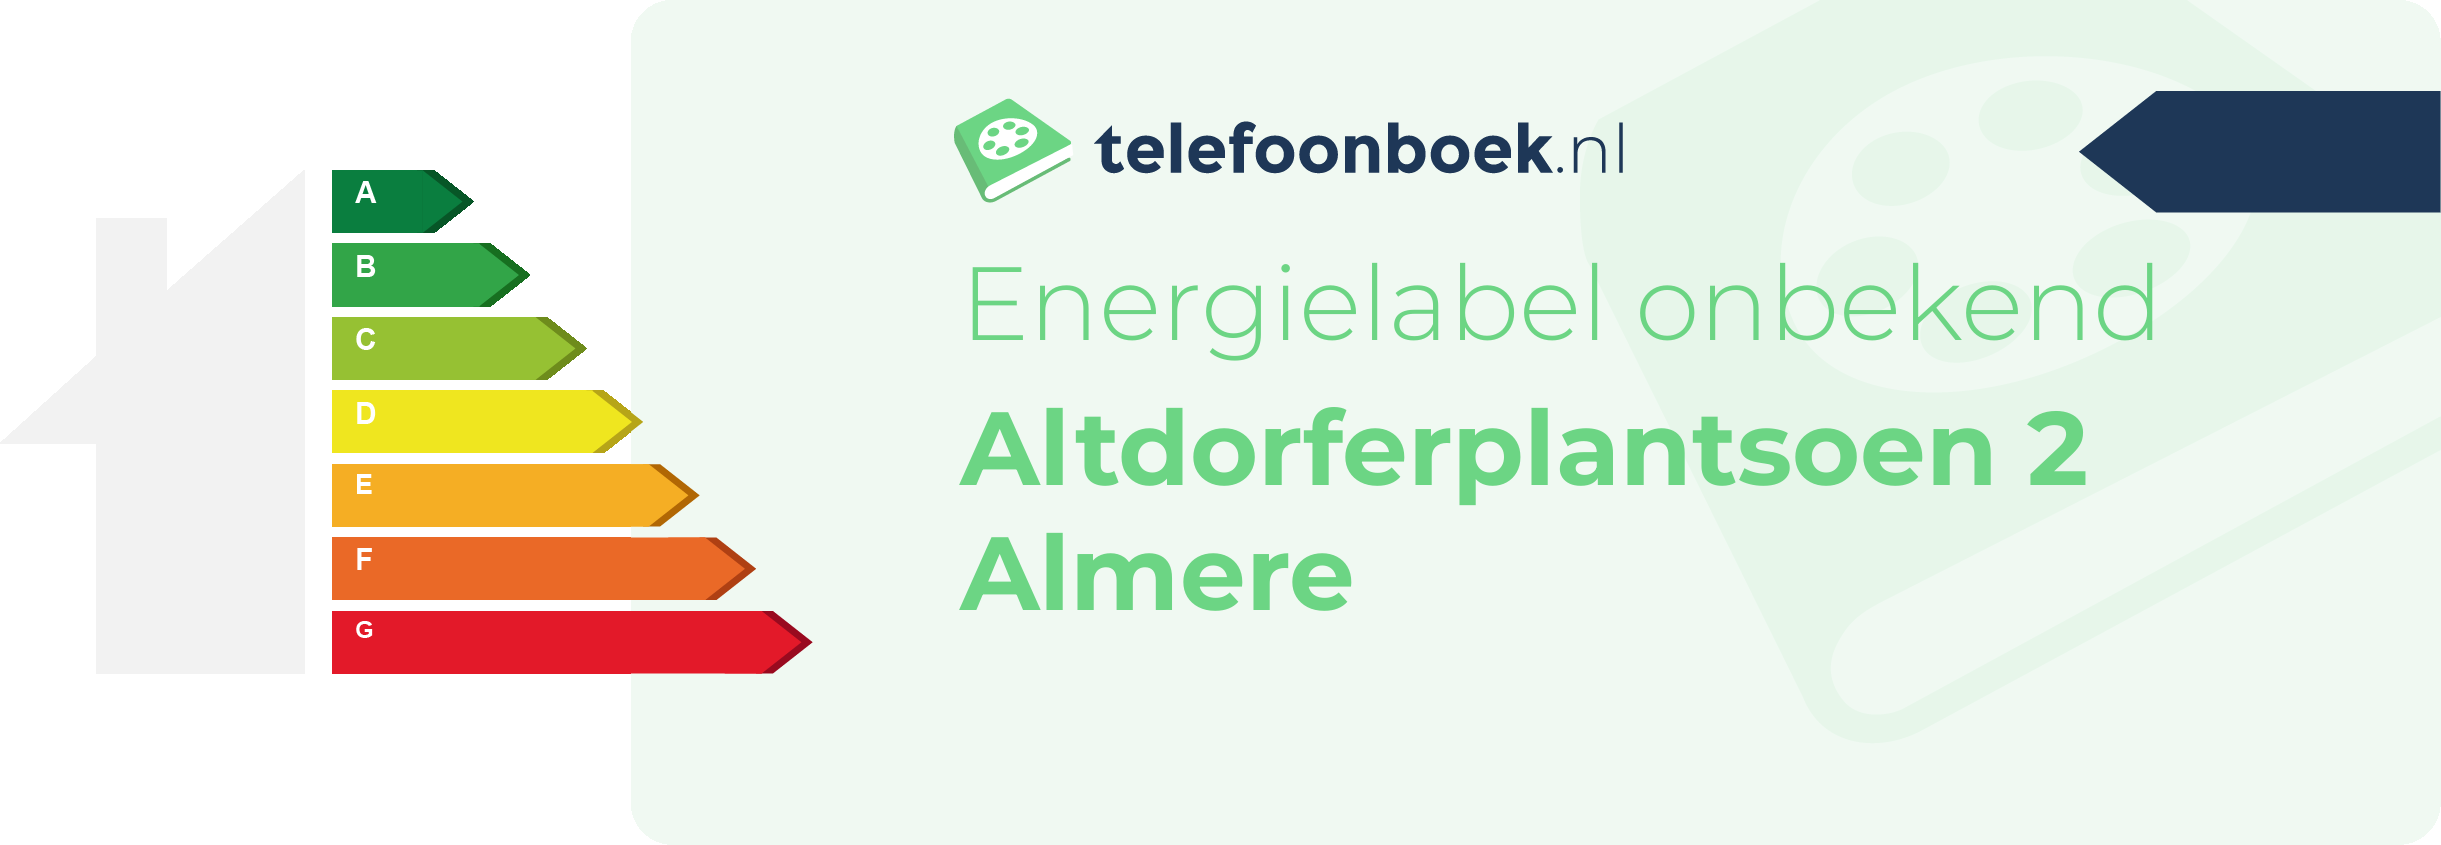 Energielabel Altdorferplantsoen 2 Almere